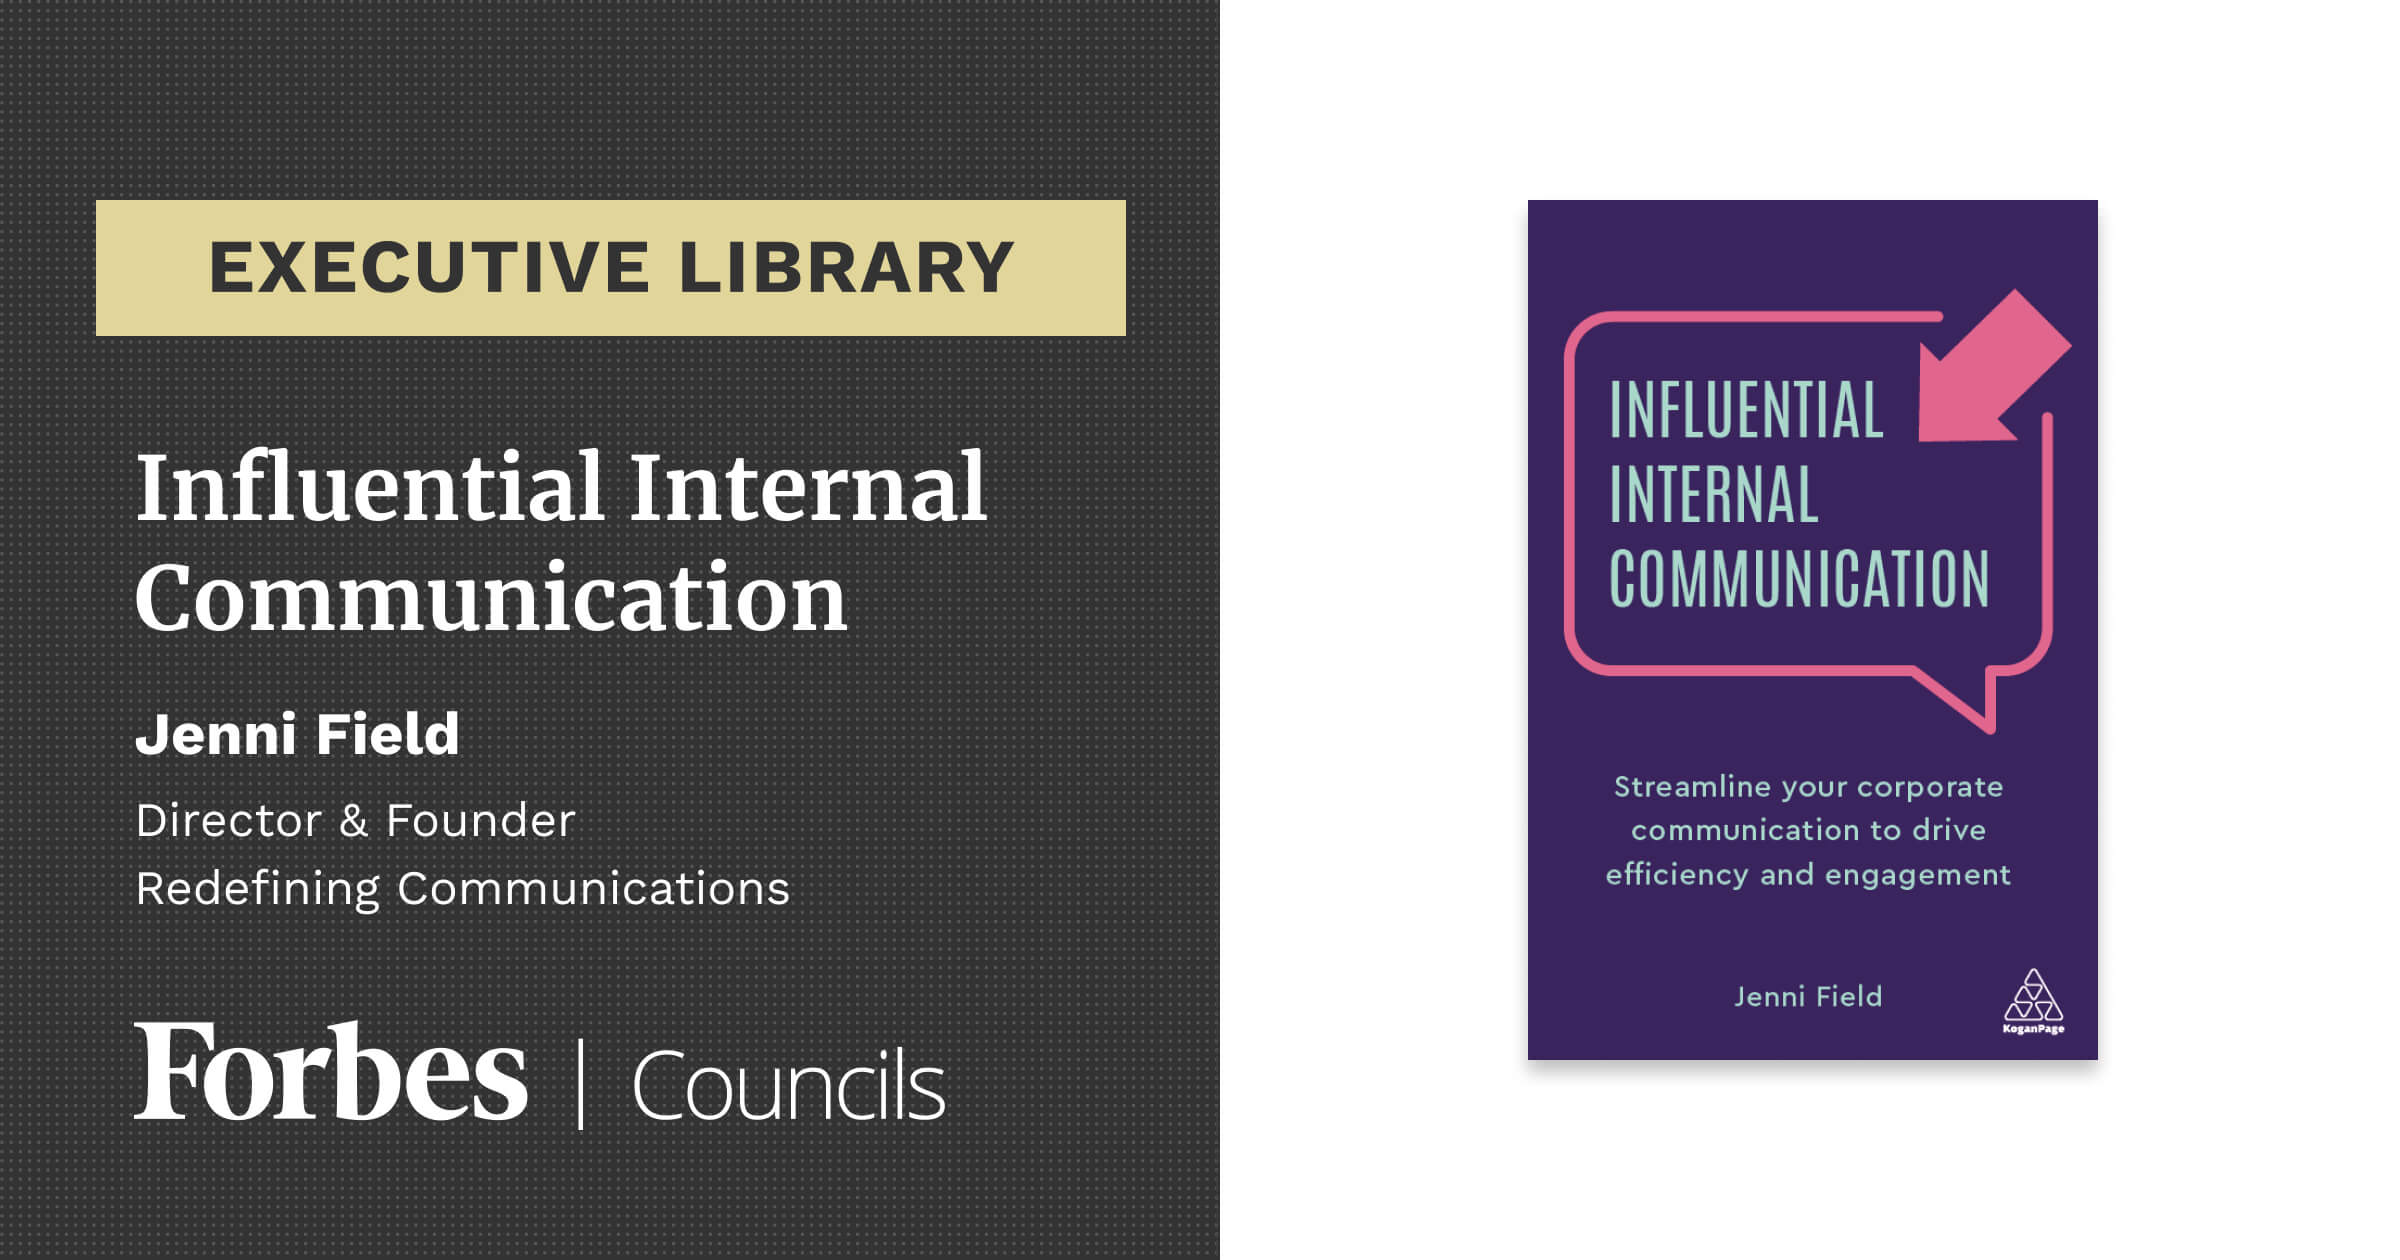 Influential Internal Communication by Jenni Field